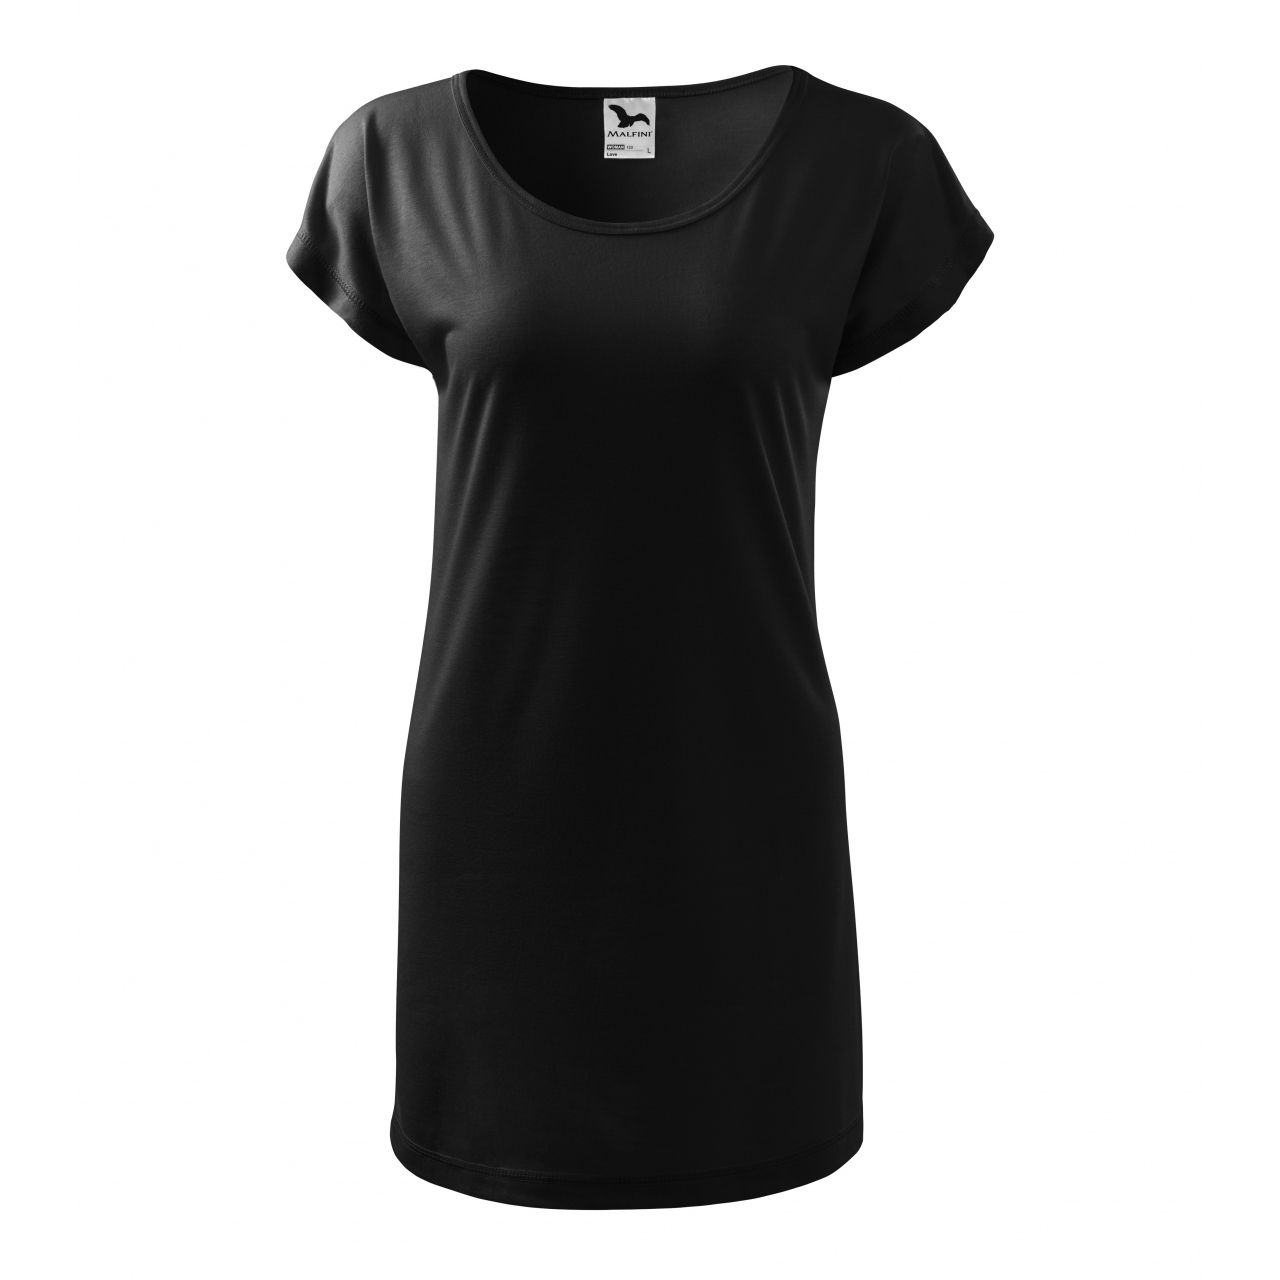 Šaty Malfini Love - černé, XL